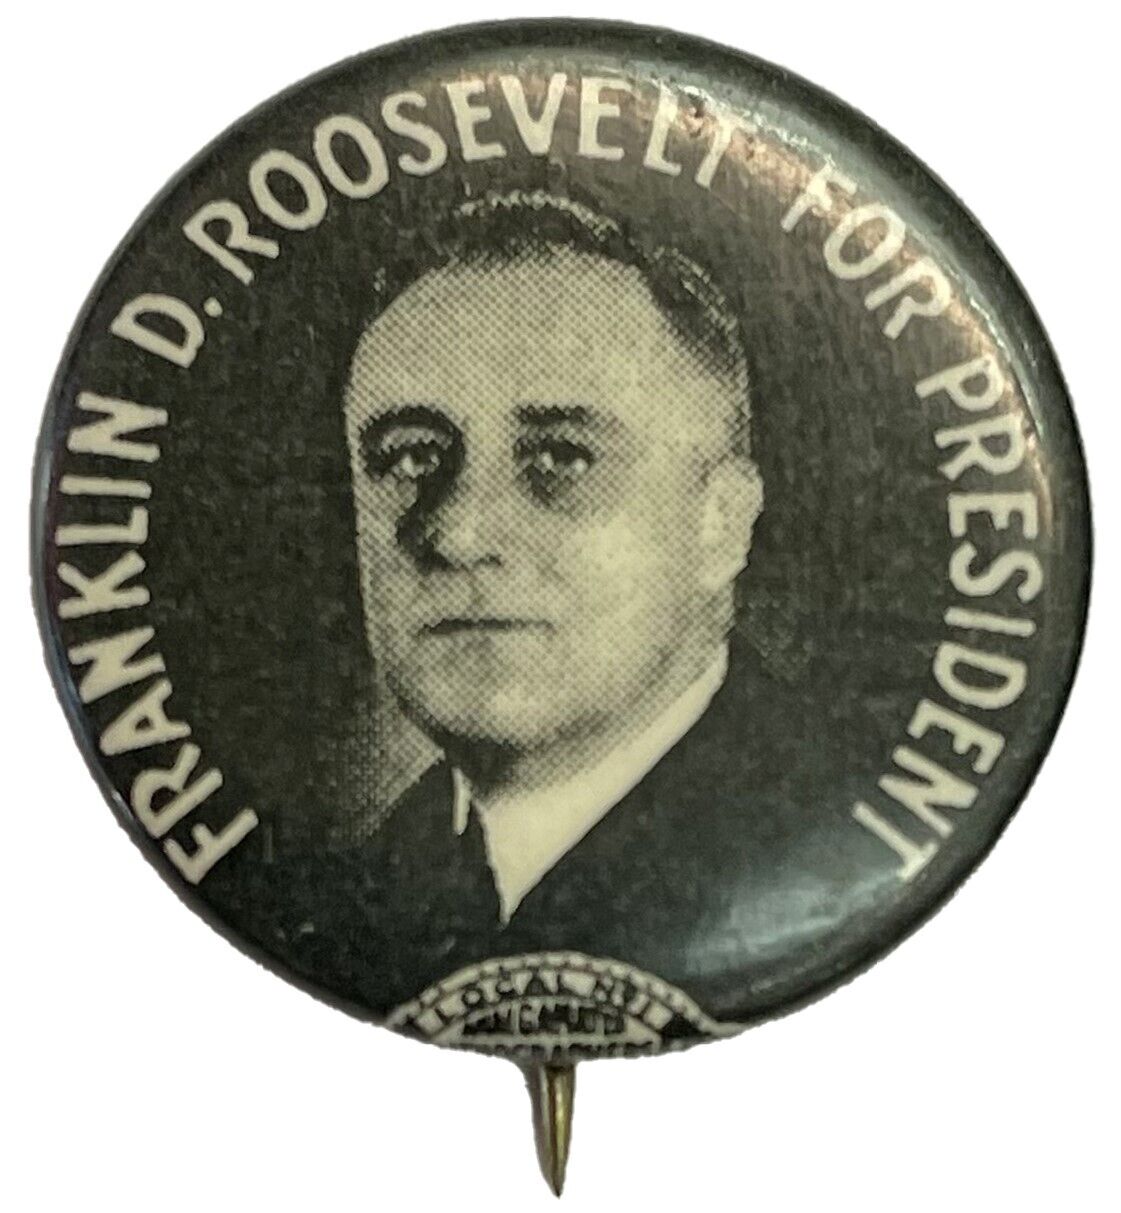 1932 FRANKLIN DELANO ROOSEVELT FDR PRESIDENTIAL CAMPAIGN 22 MM BUTTON